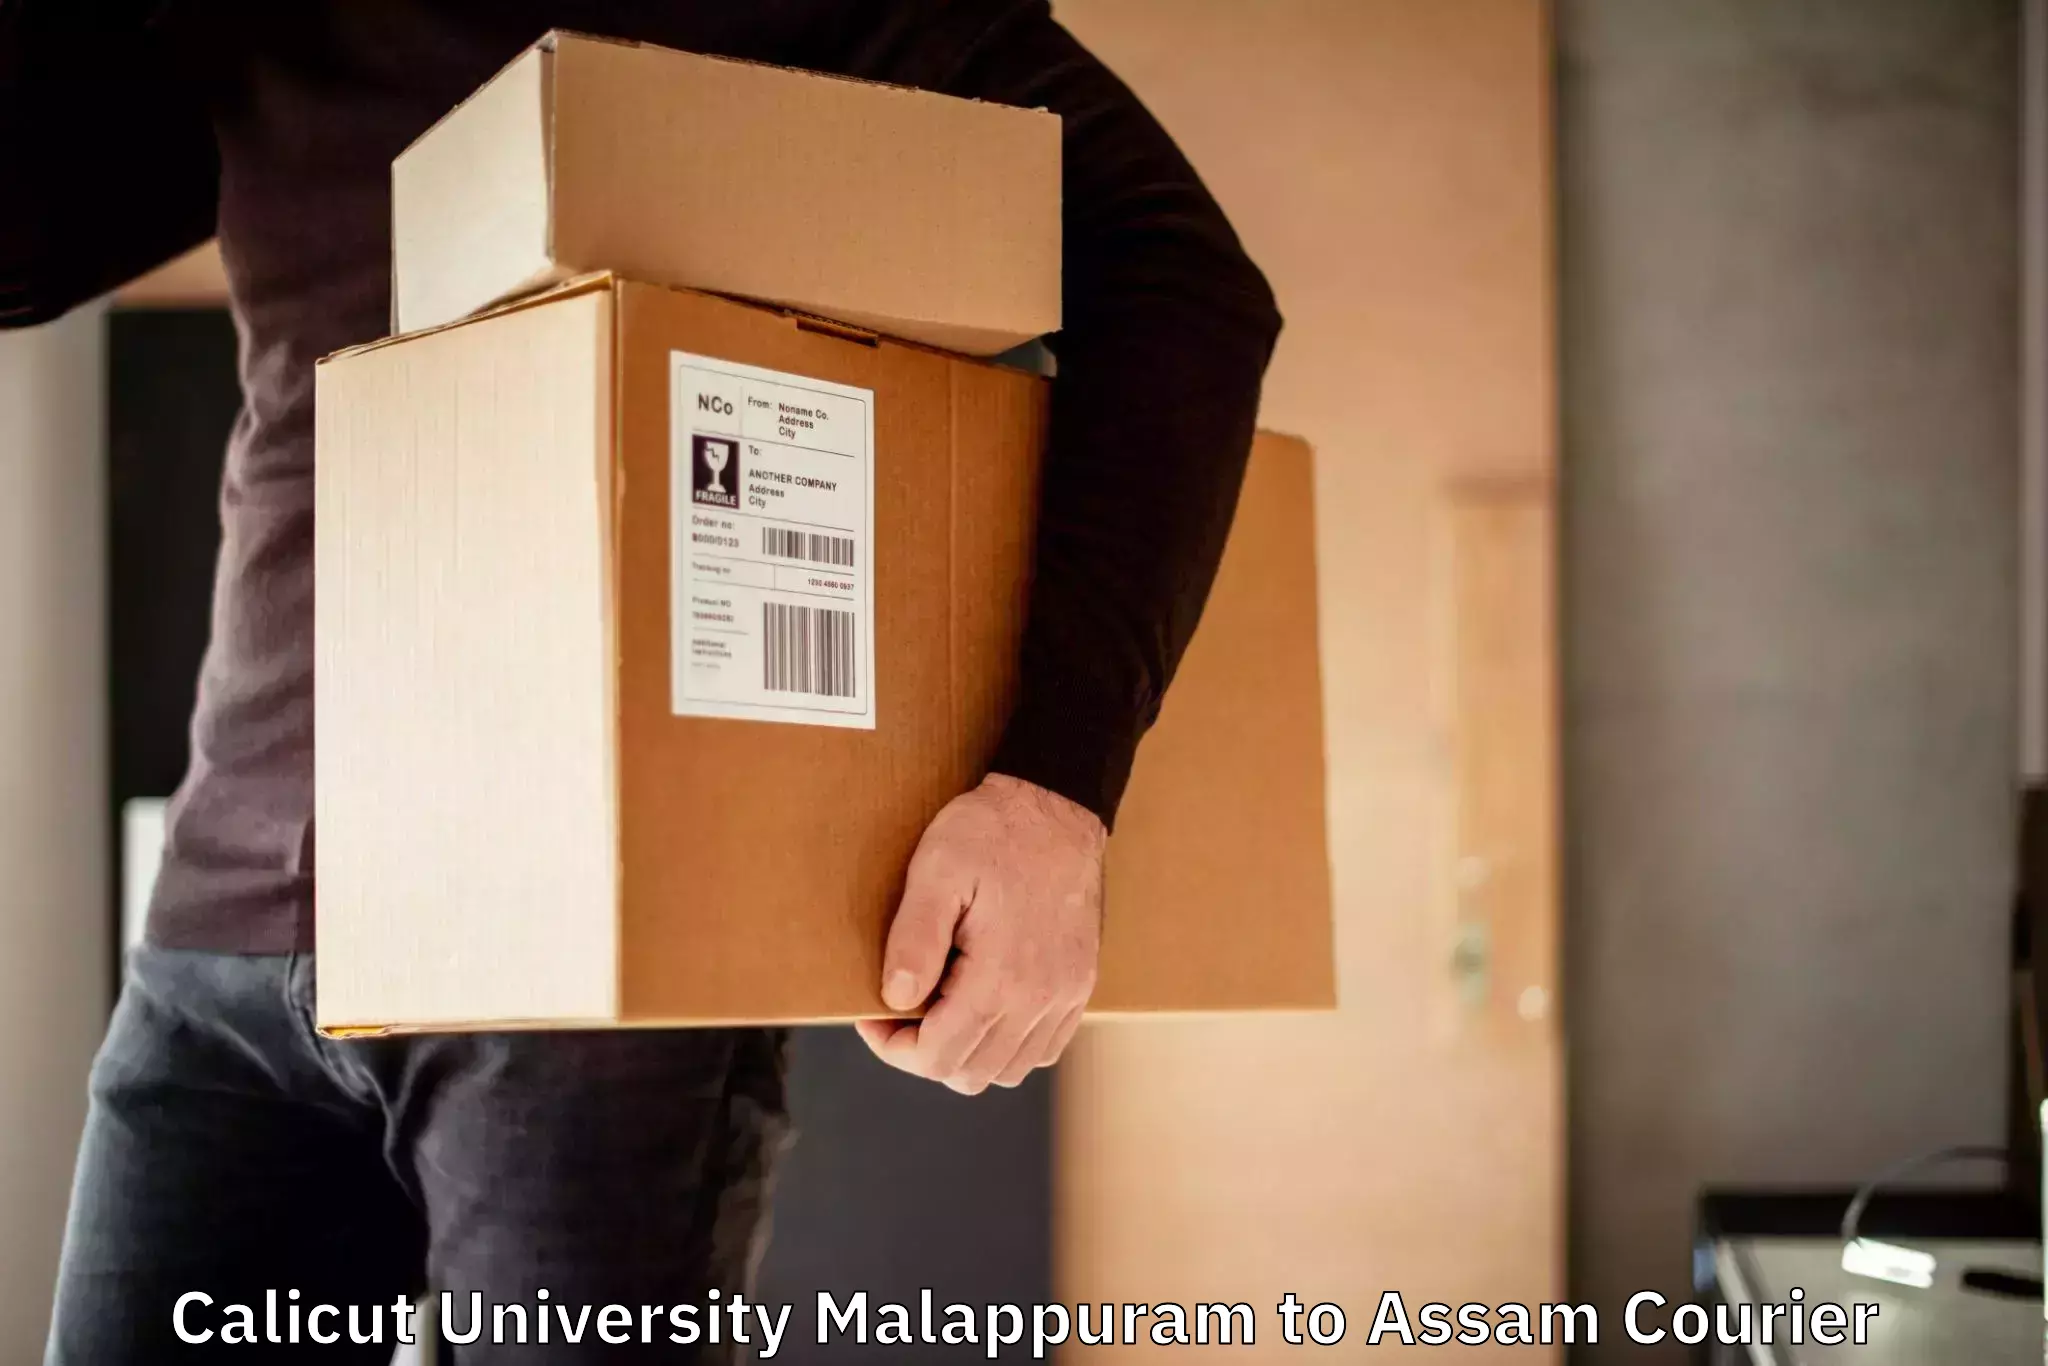 Efficient order fulfillment Calicut University Malappuram to Assam